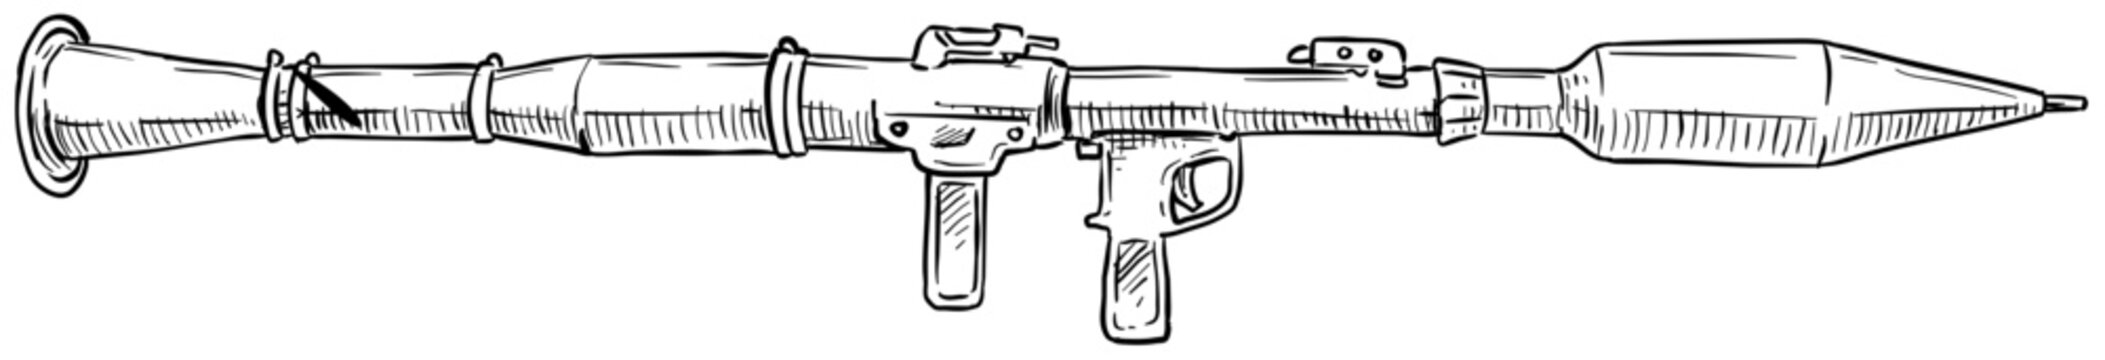 bazooka handdrawn illustration